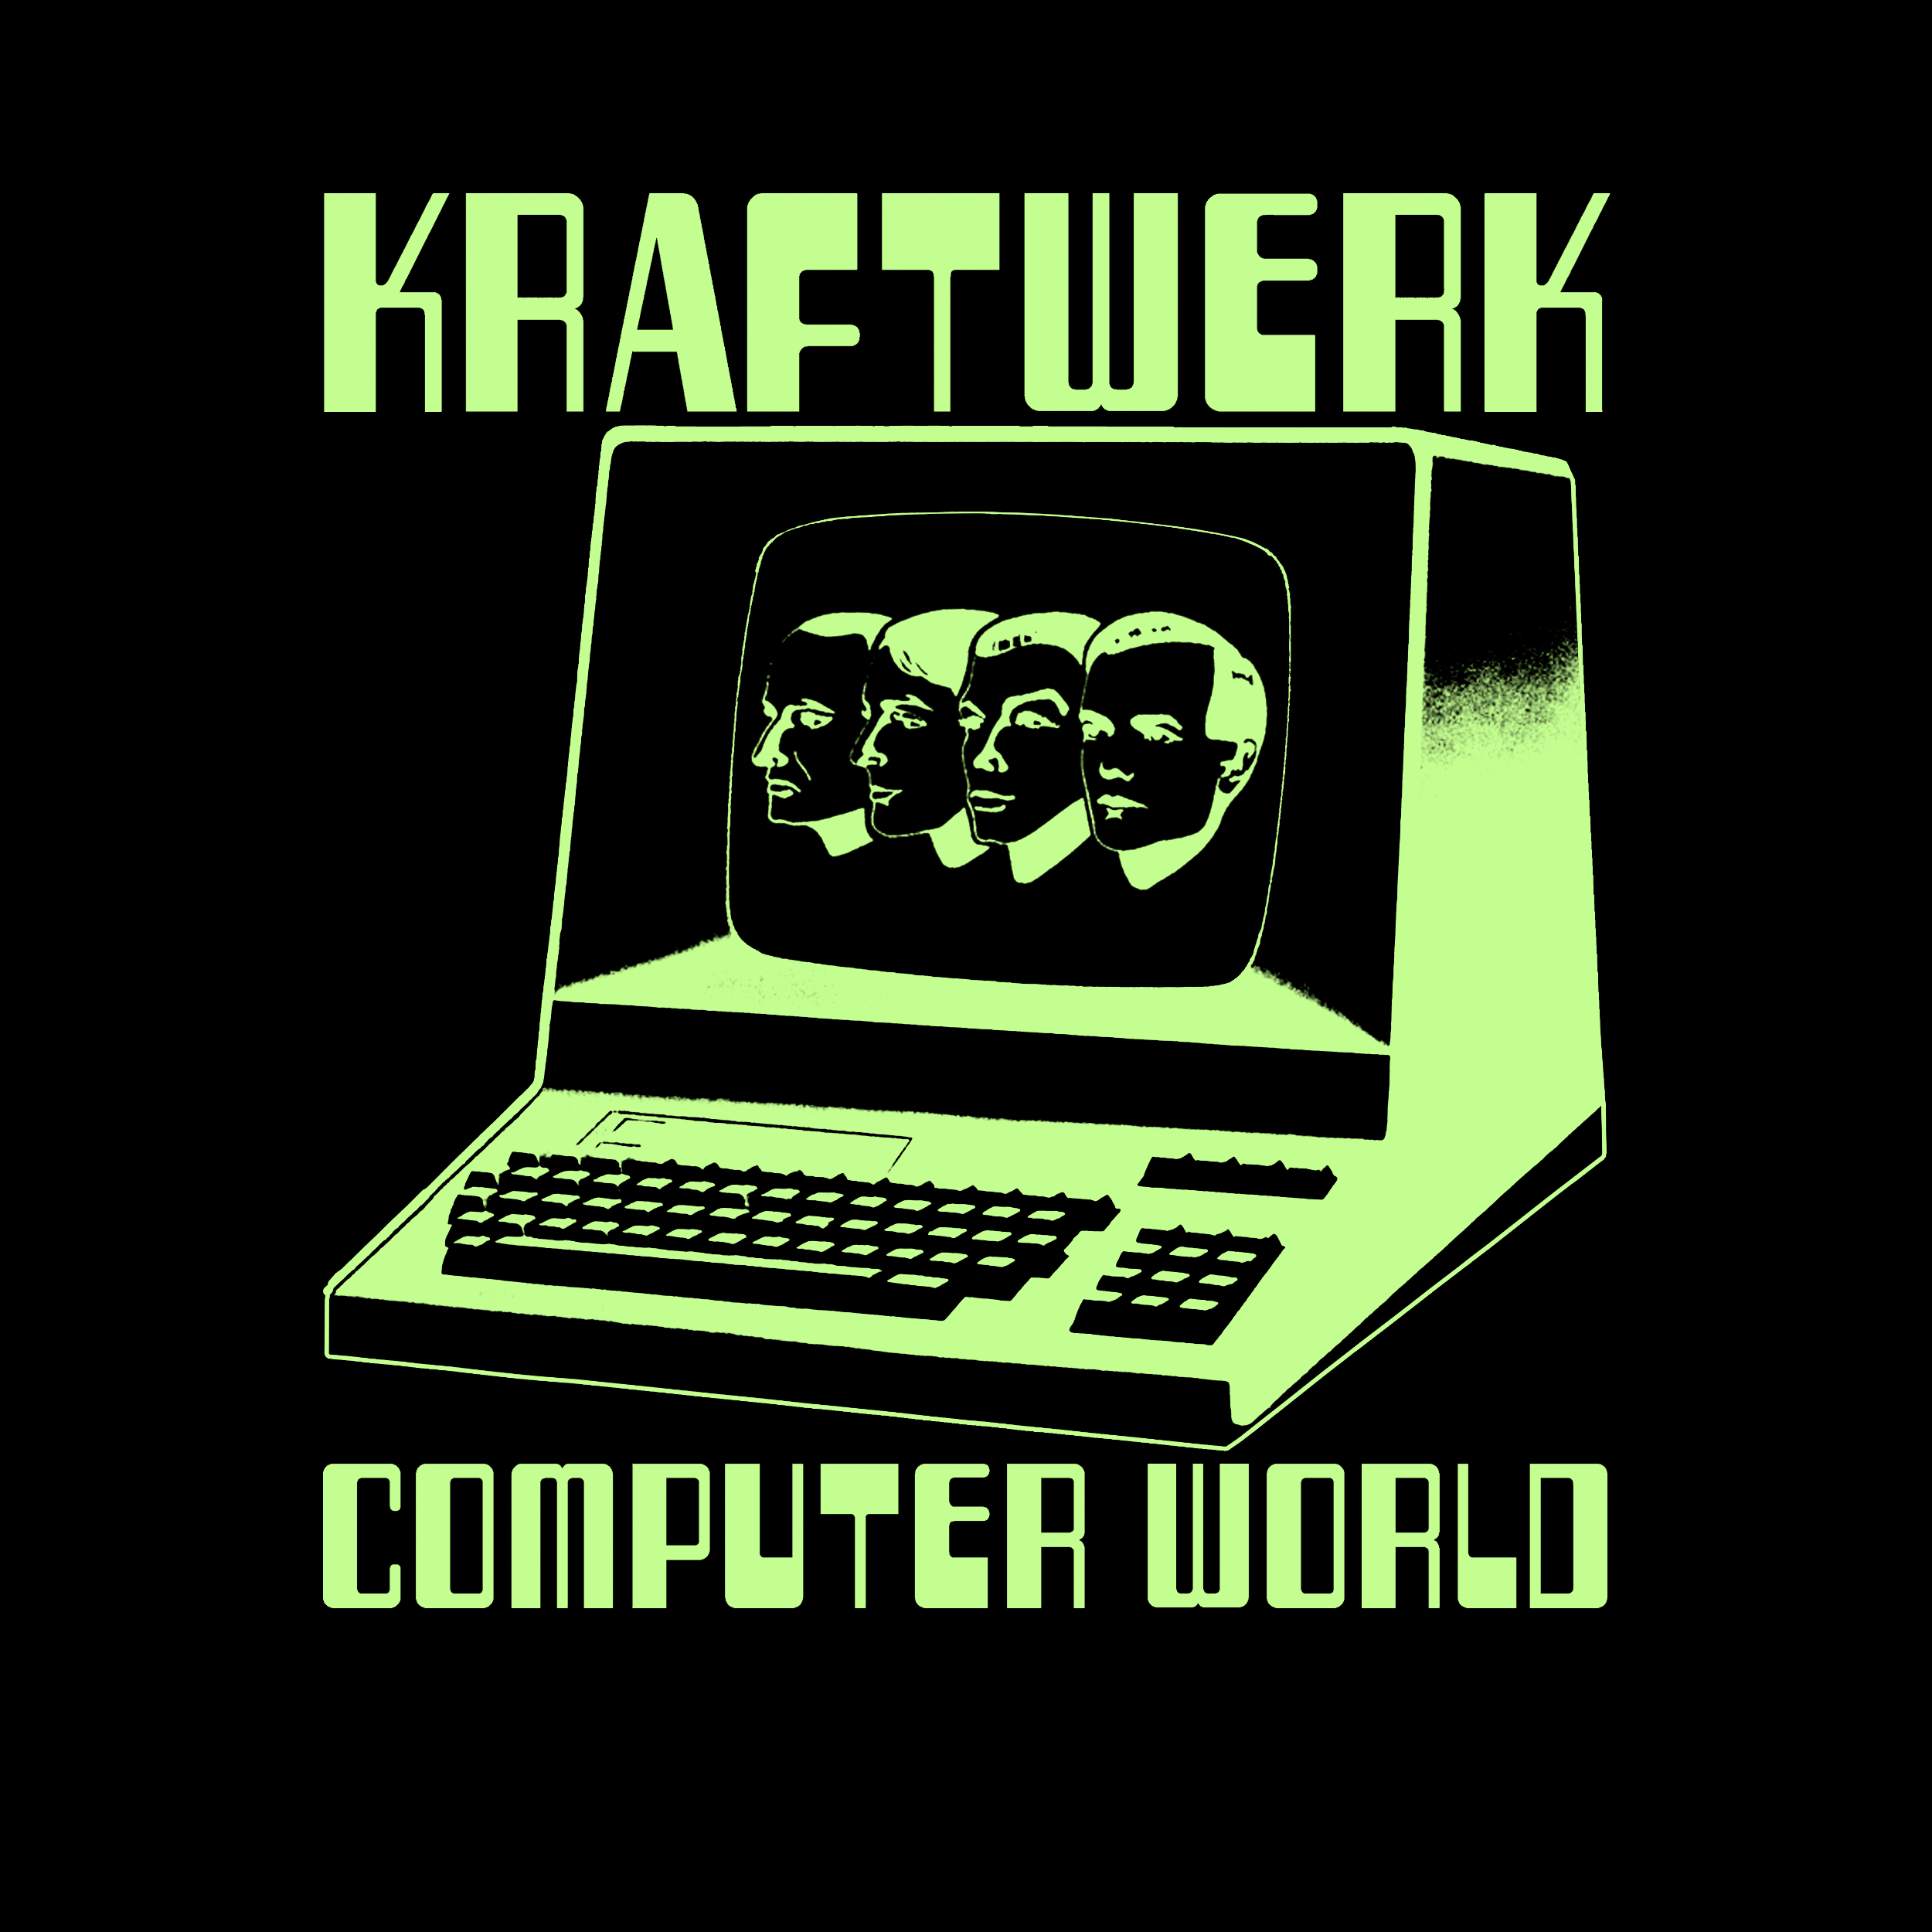 Kraftwerk Computer World Premium Tee